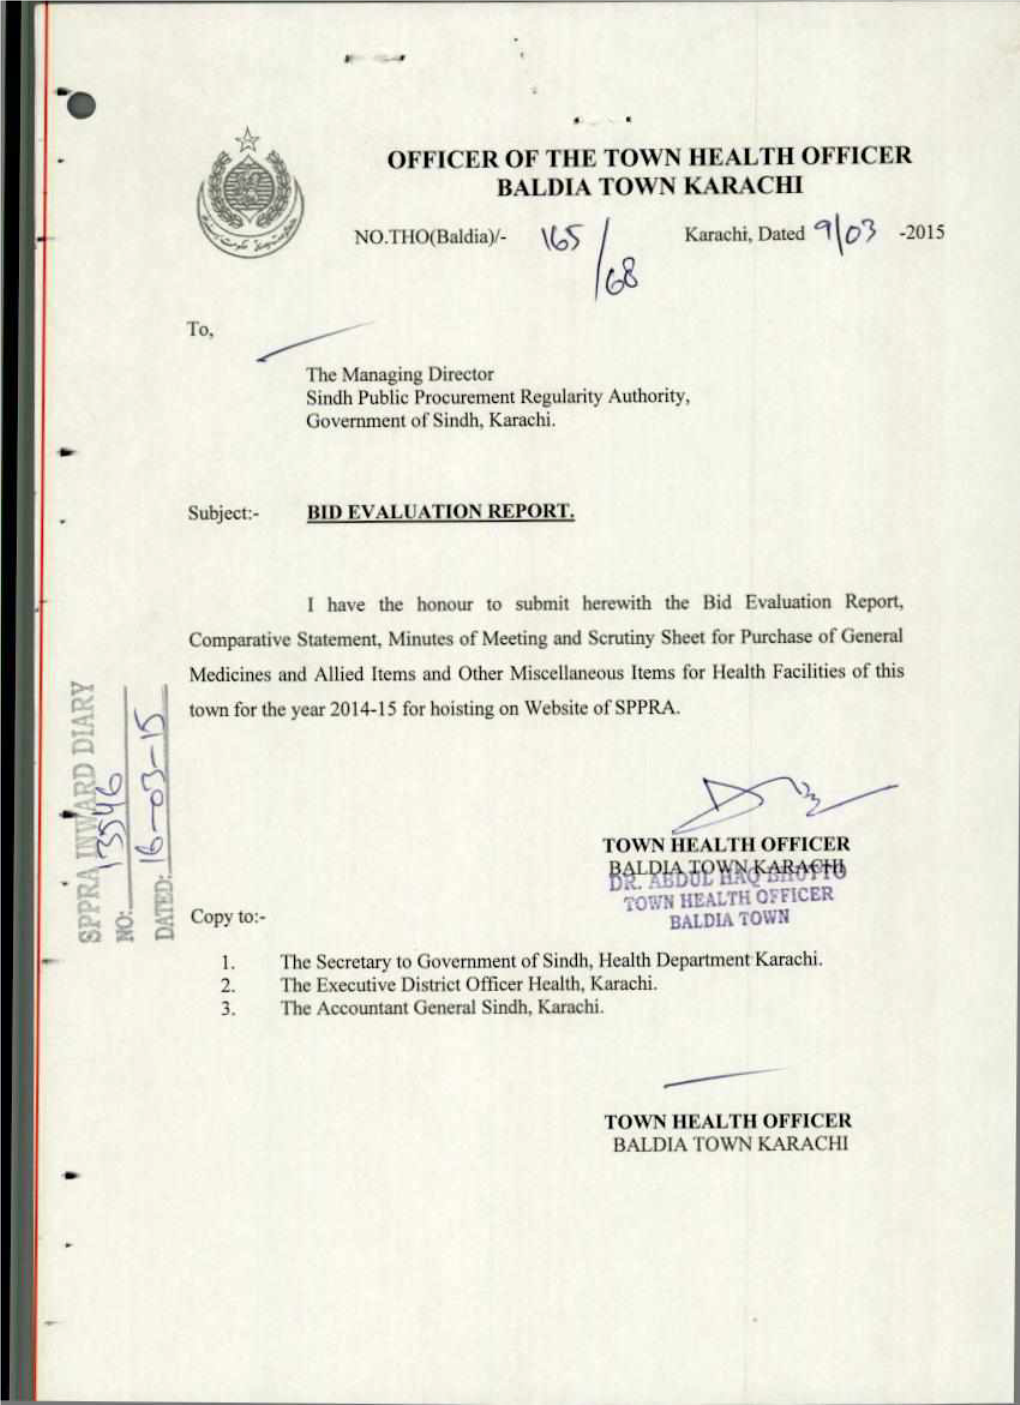 Officer of the Town Health Officer Baldia Town Karachi